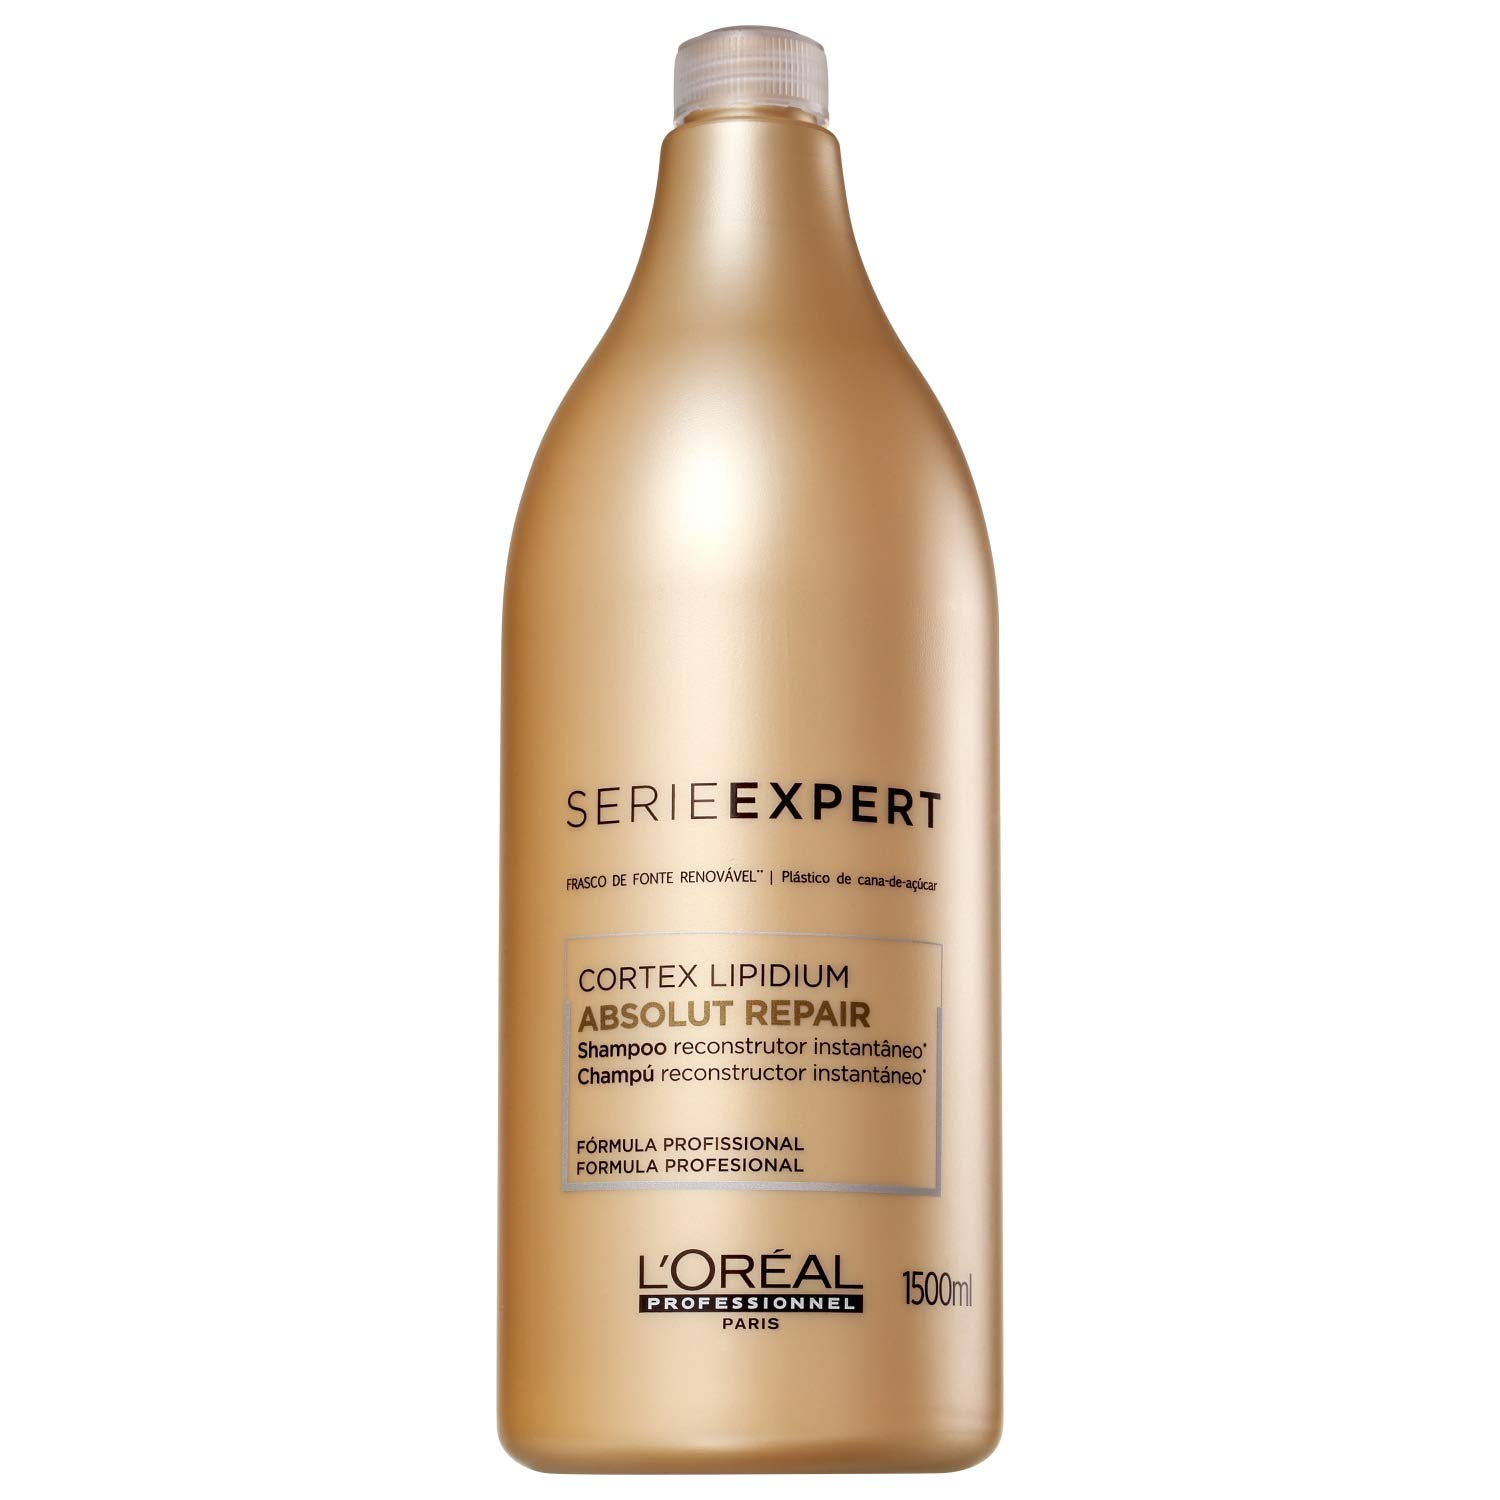 L'Oreal Professionnel Absolut Repair Cortex Lipidium Shampoo